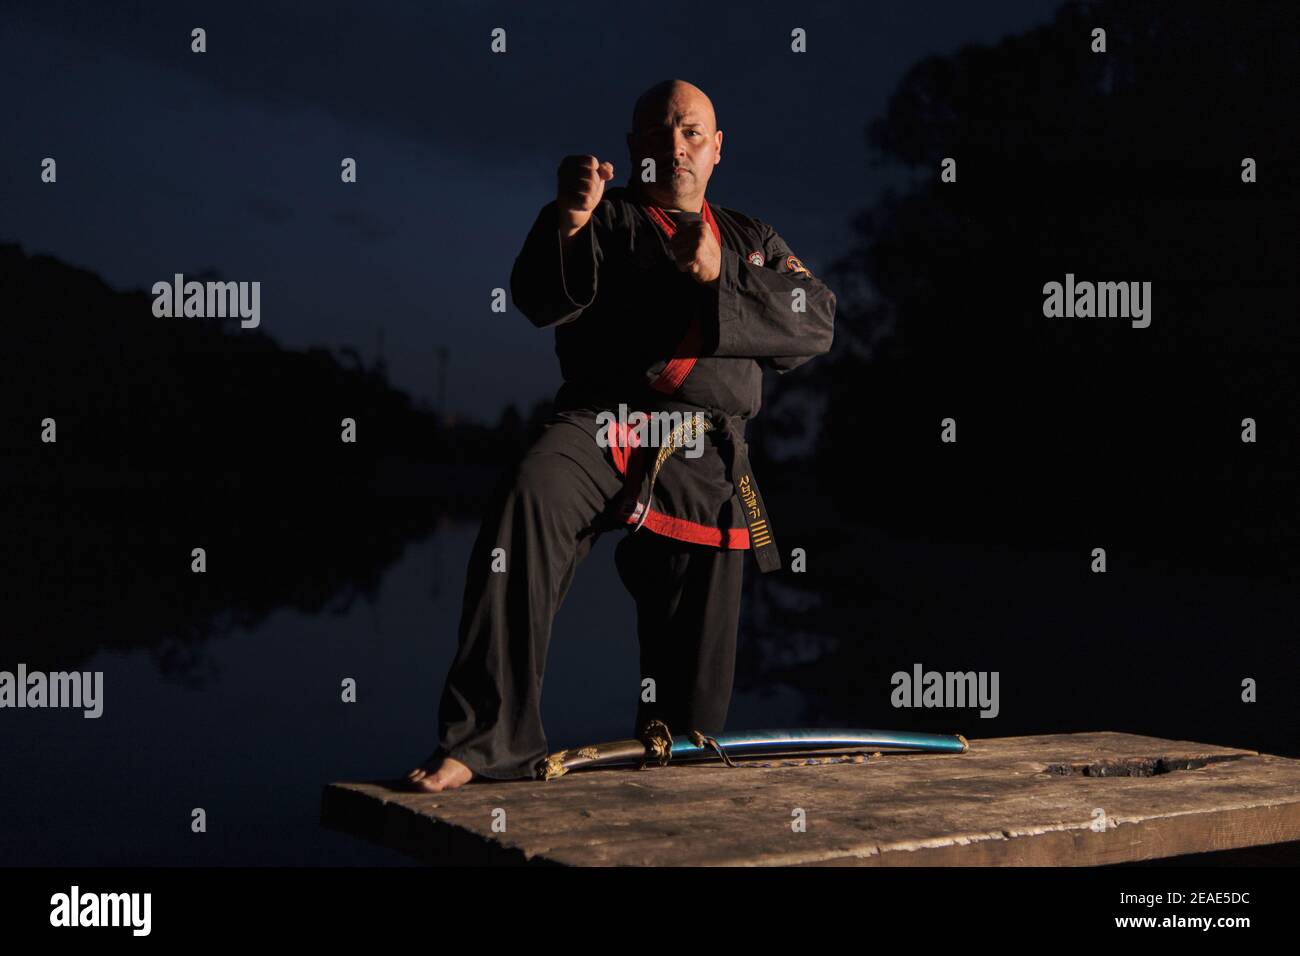 Sipalkido master at night with katana and read and black uniform Stock Photo